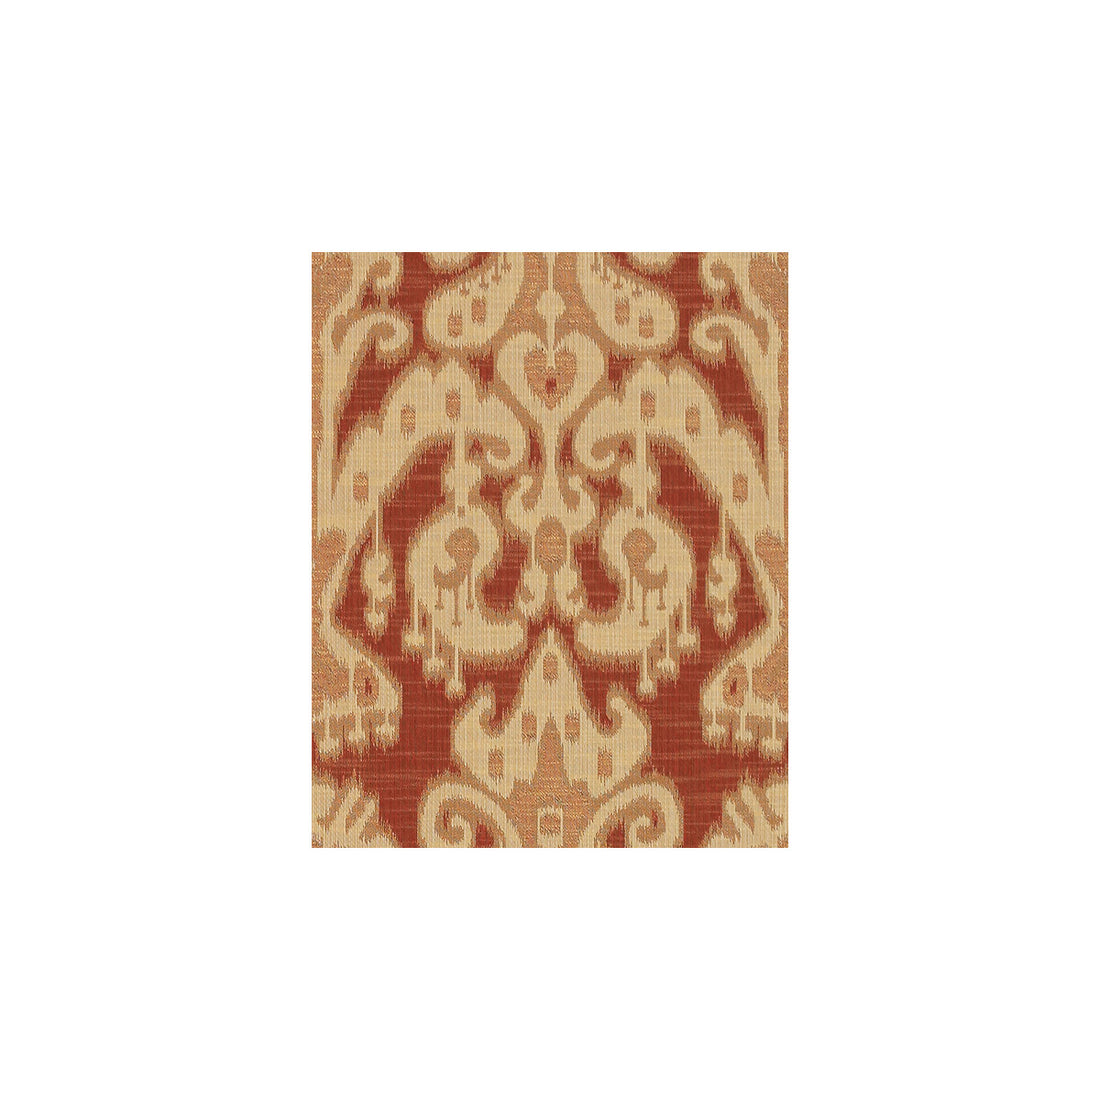 Kravet Design fabric in 31446-24 color - pattern 31446.24.0 - by Kravet Design in the Gis collection